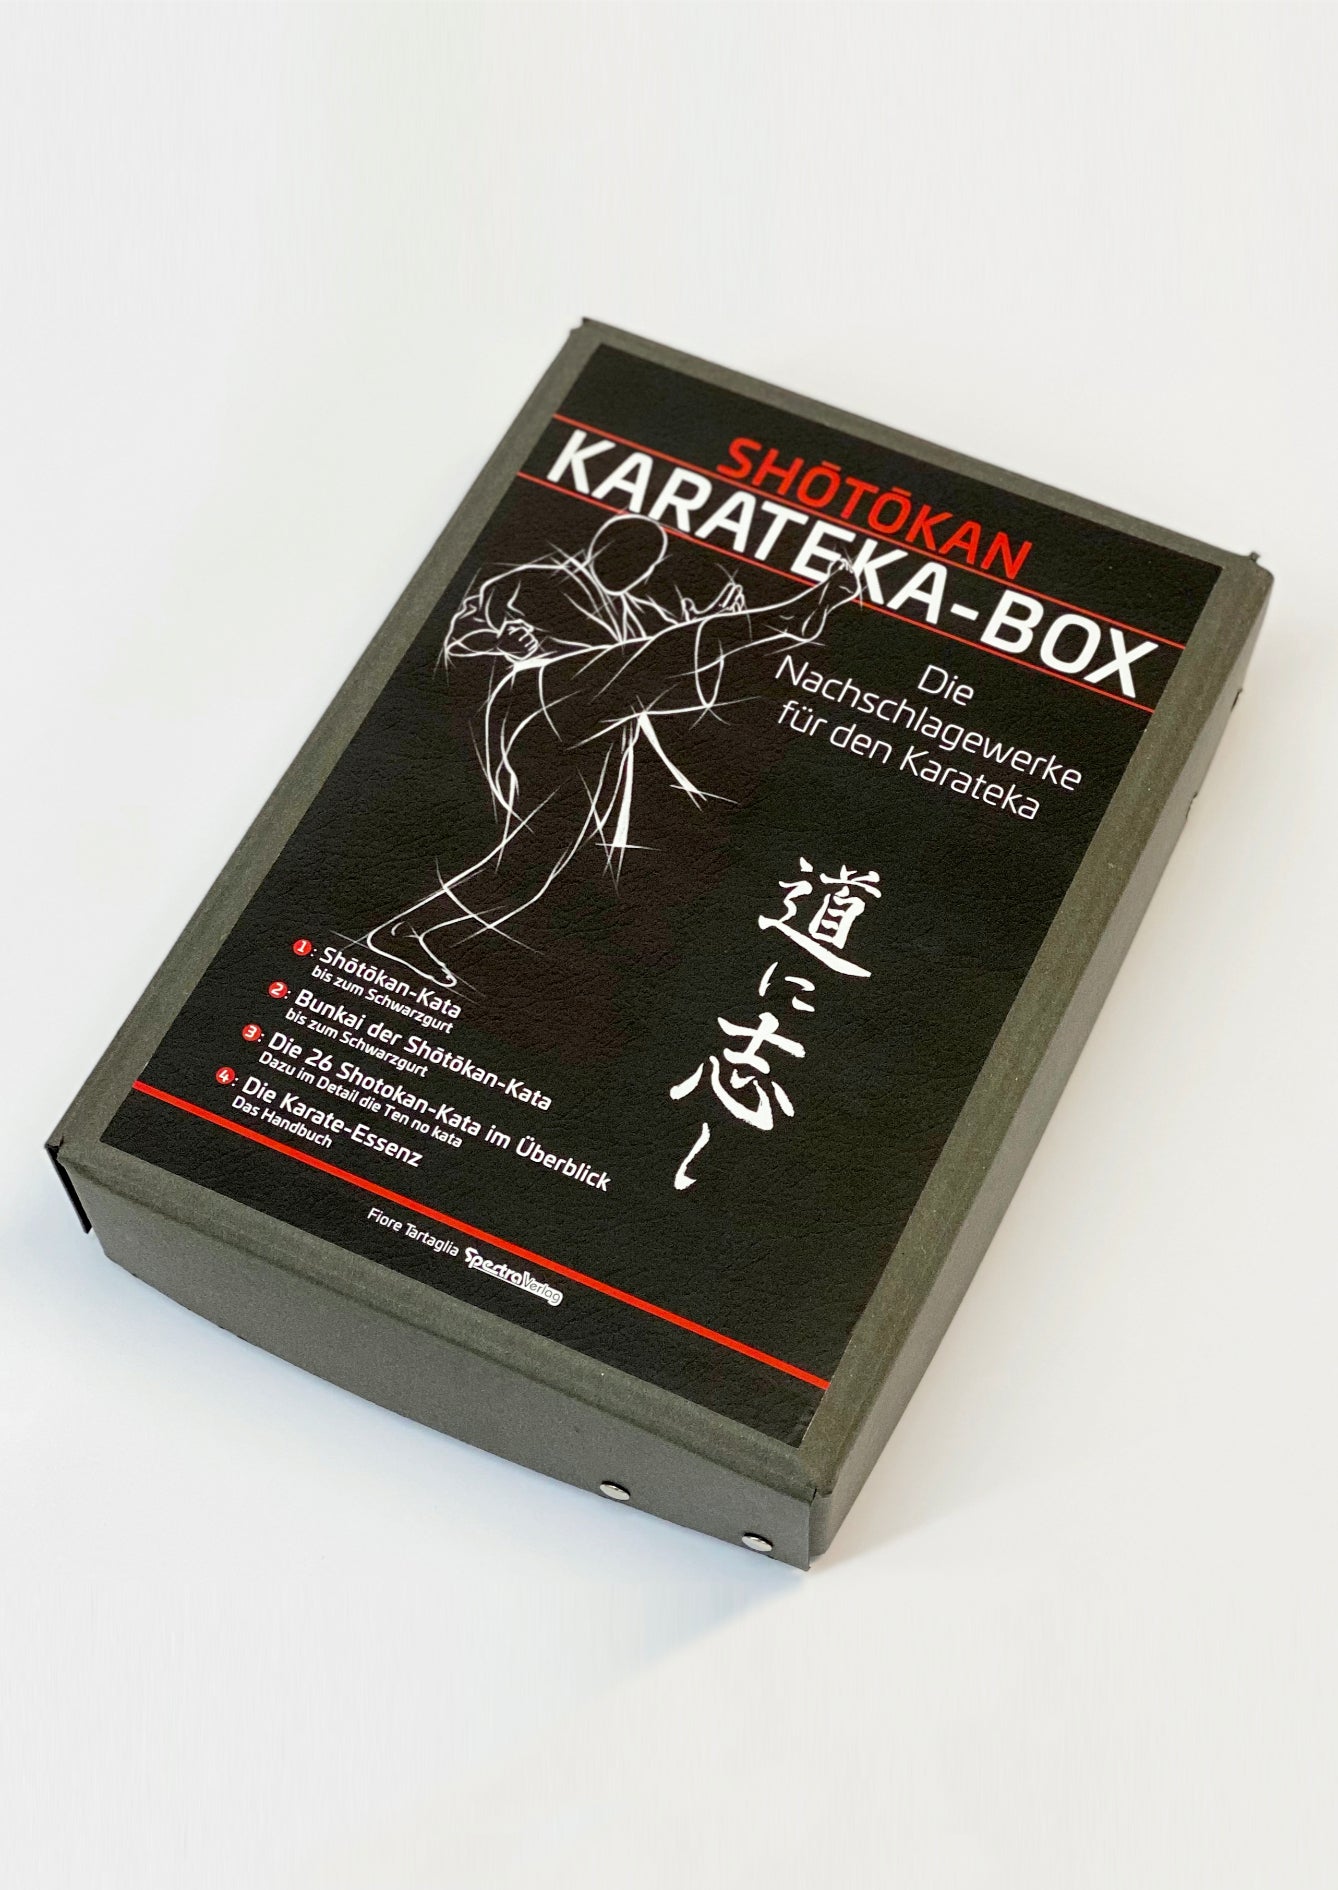 🇩🇪 Bücher-Set | Shōtōkan-Karateka-Box